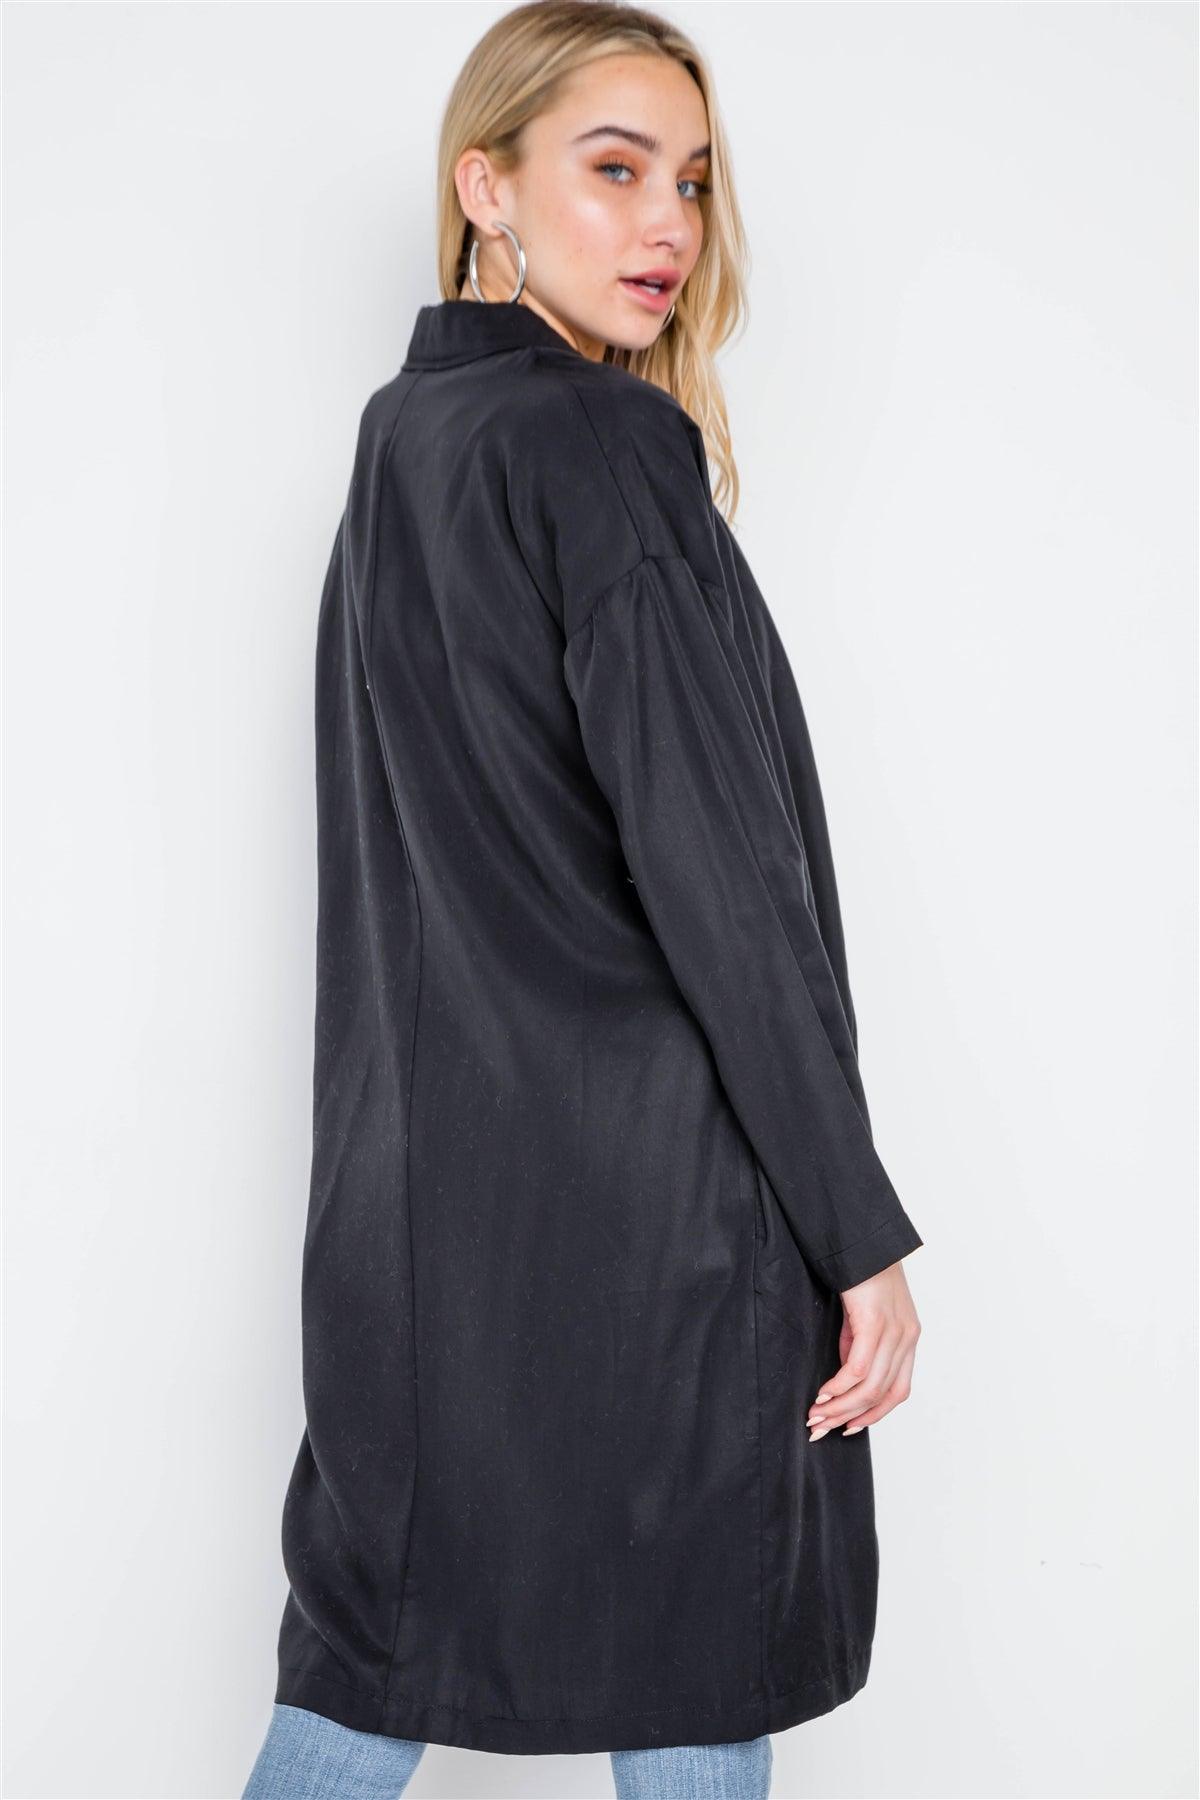 Black Solid Long Sleeve Tencel Coat /1-3-1-1